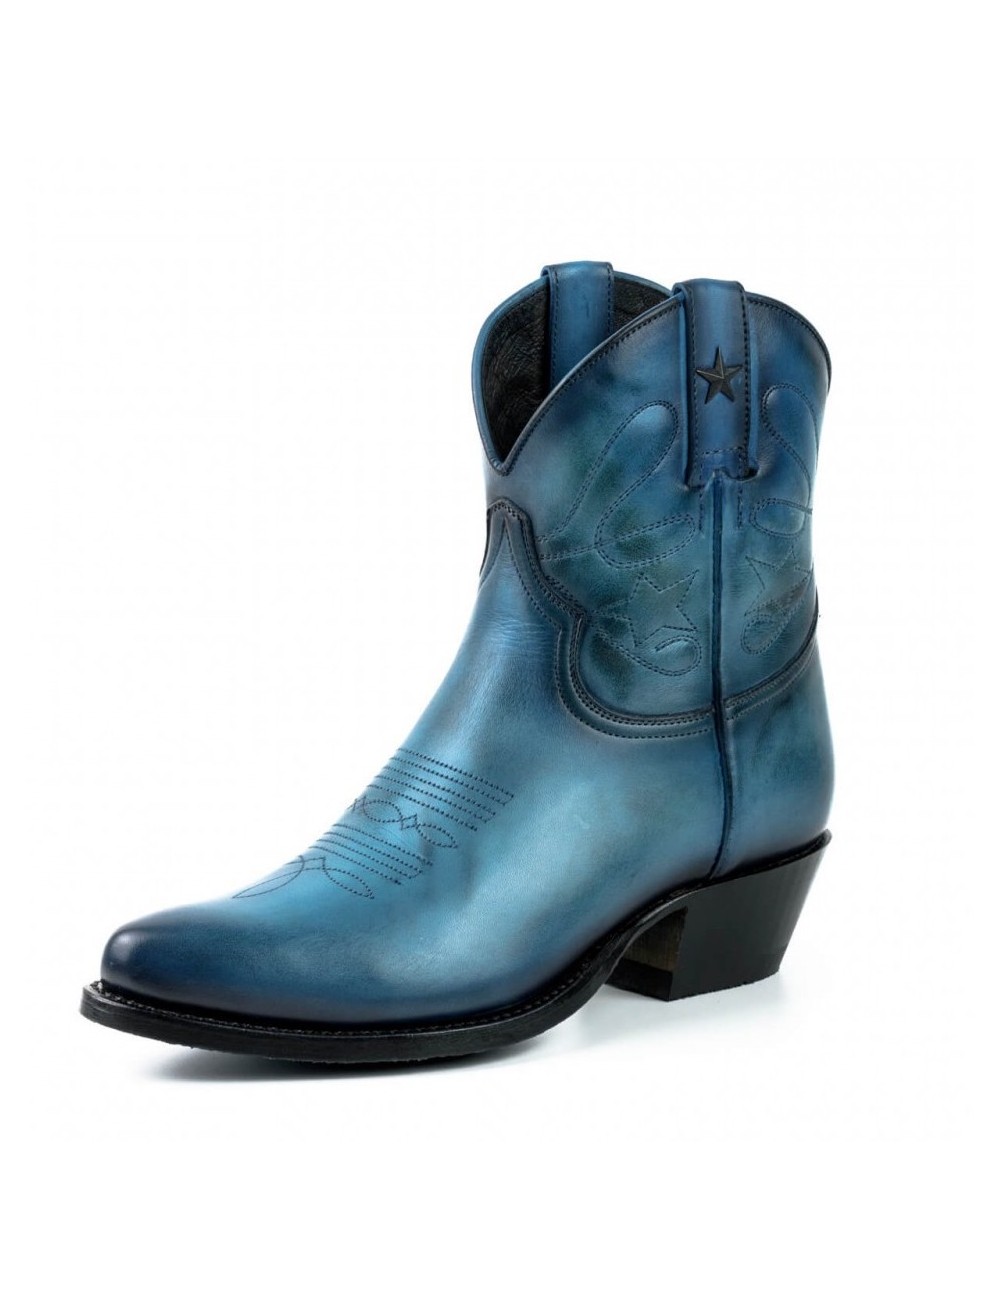 Boots cowboy femme bleu marine en cuir - Bottines femme artisanales